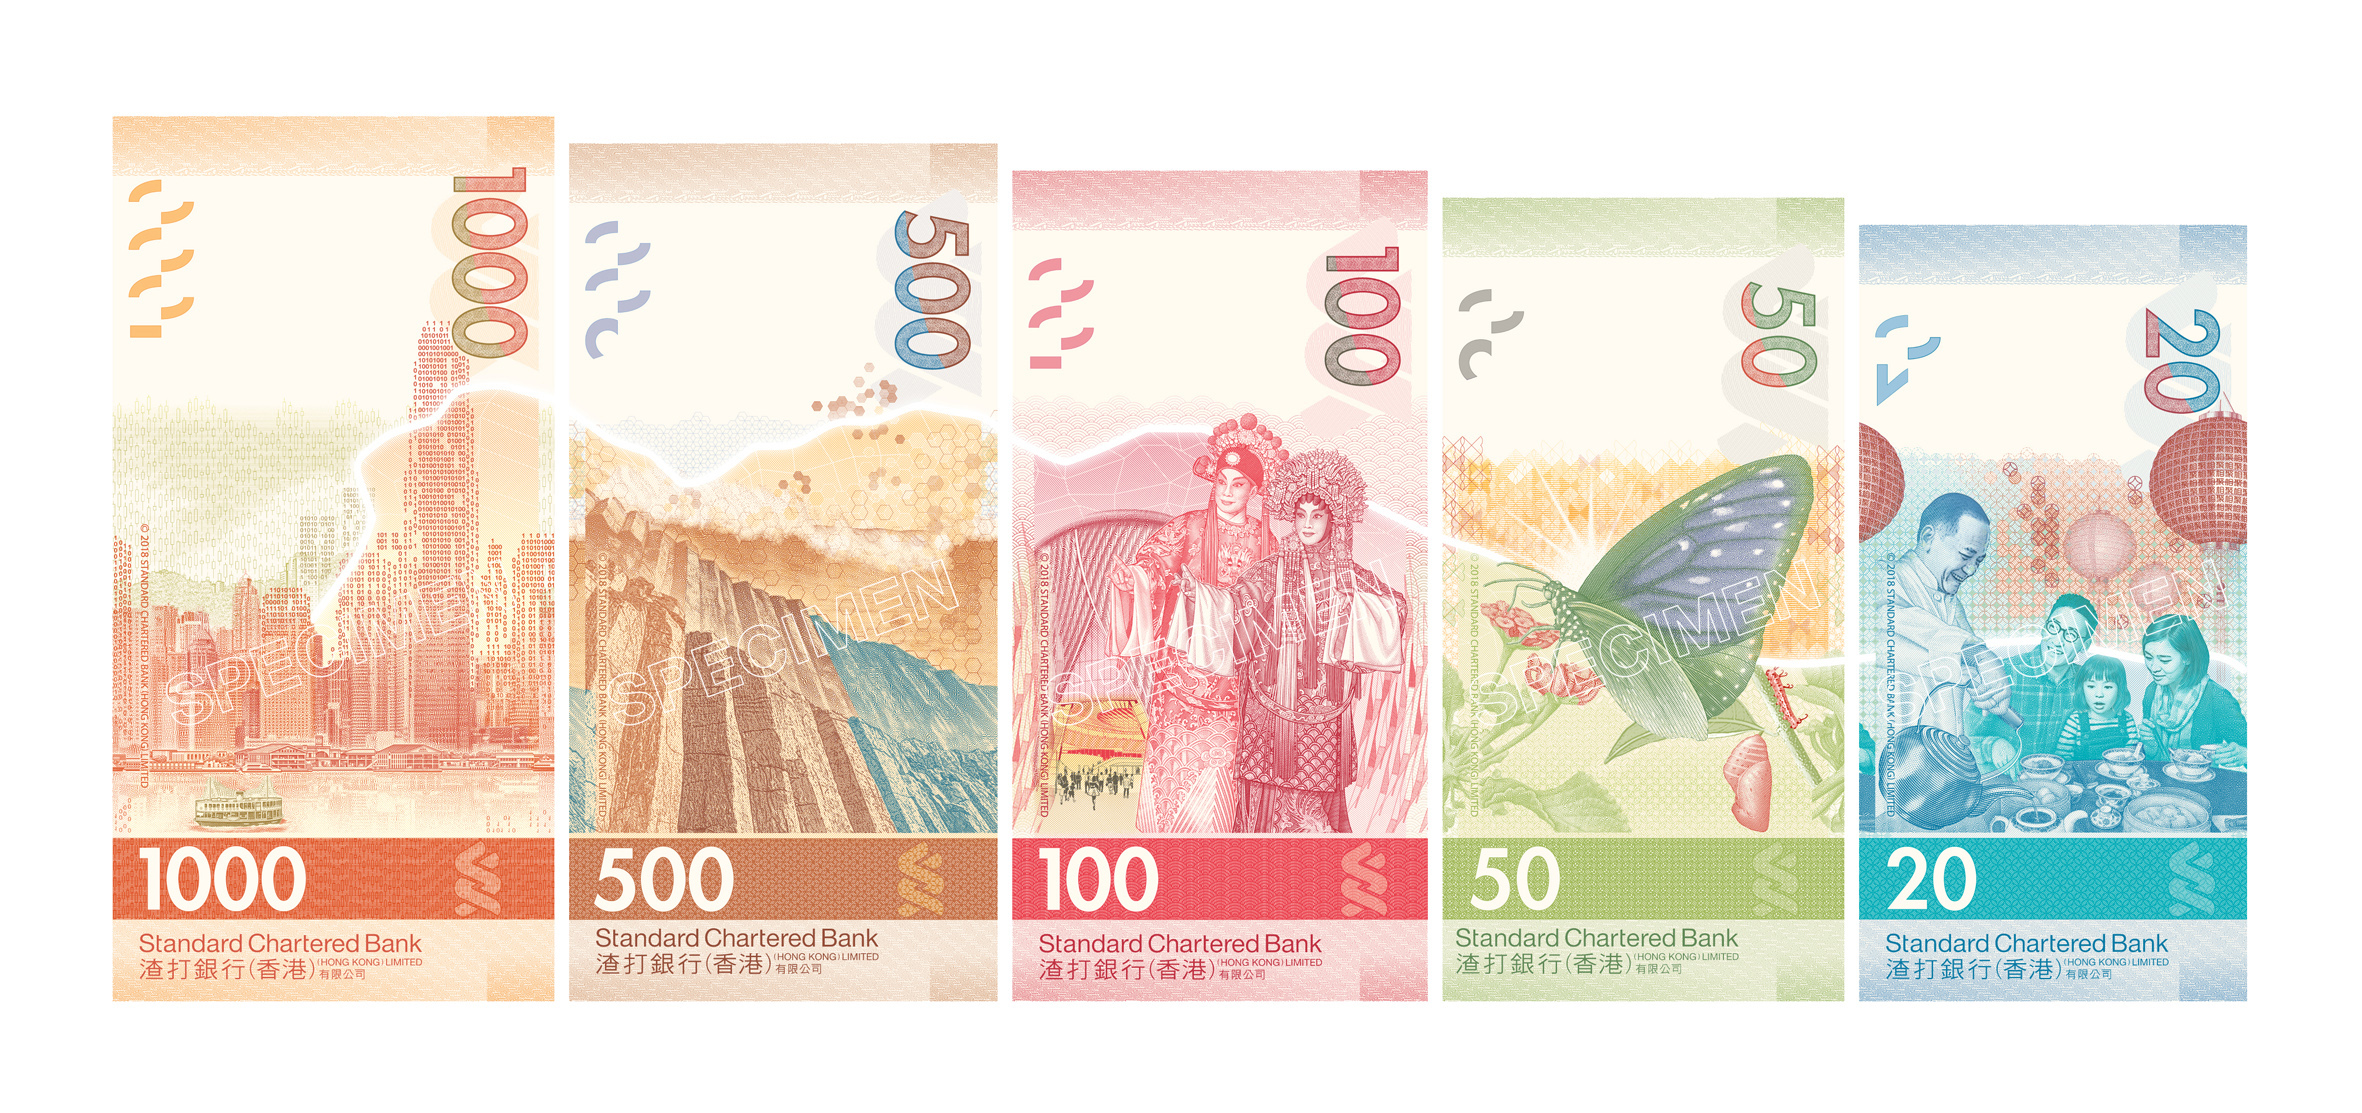 Standard Chartered Hong Kong banknotes design 2018